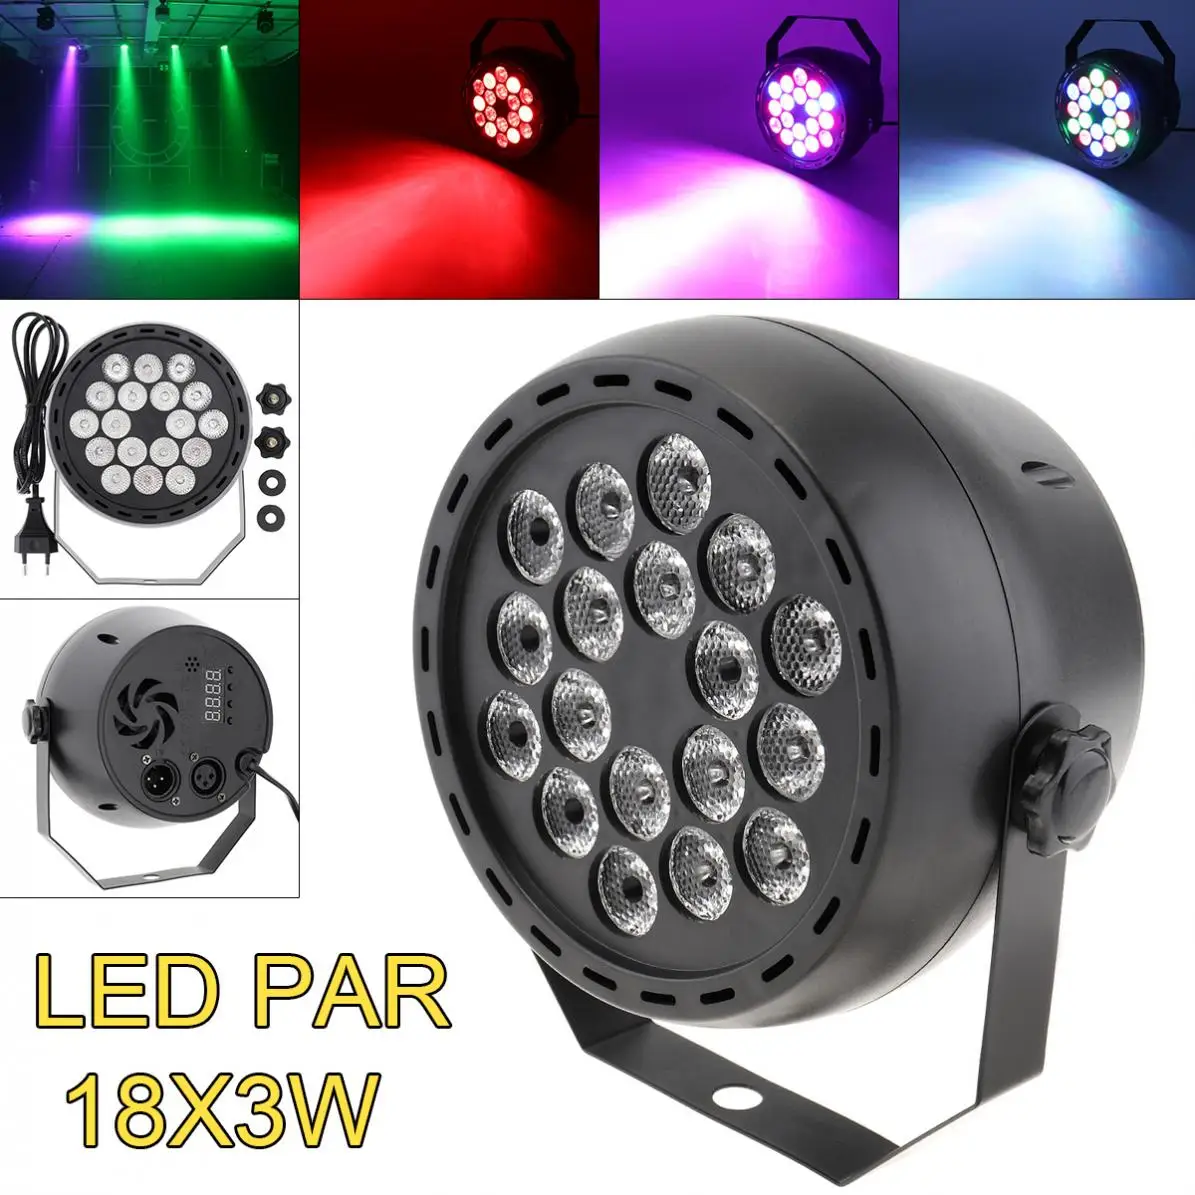 

18x3W LED Mini Par Light RGB Stage Light with Music Control / Automatic / DMX 512 for Party/Bar/Family Gathering/KTV DJ Light